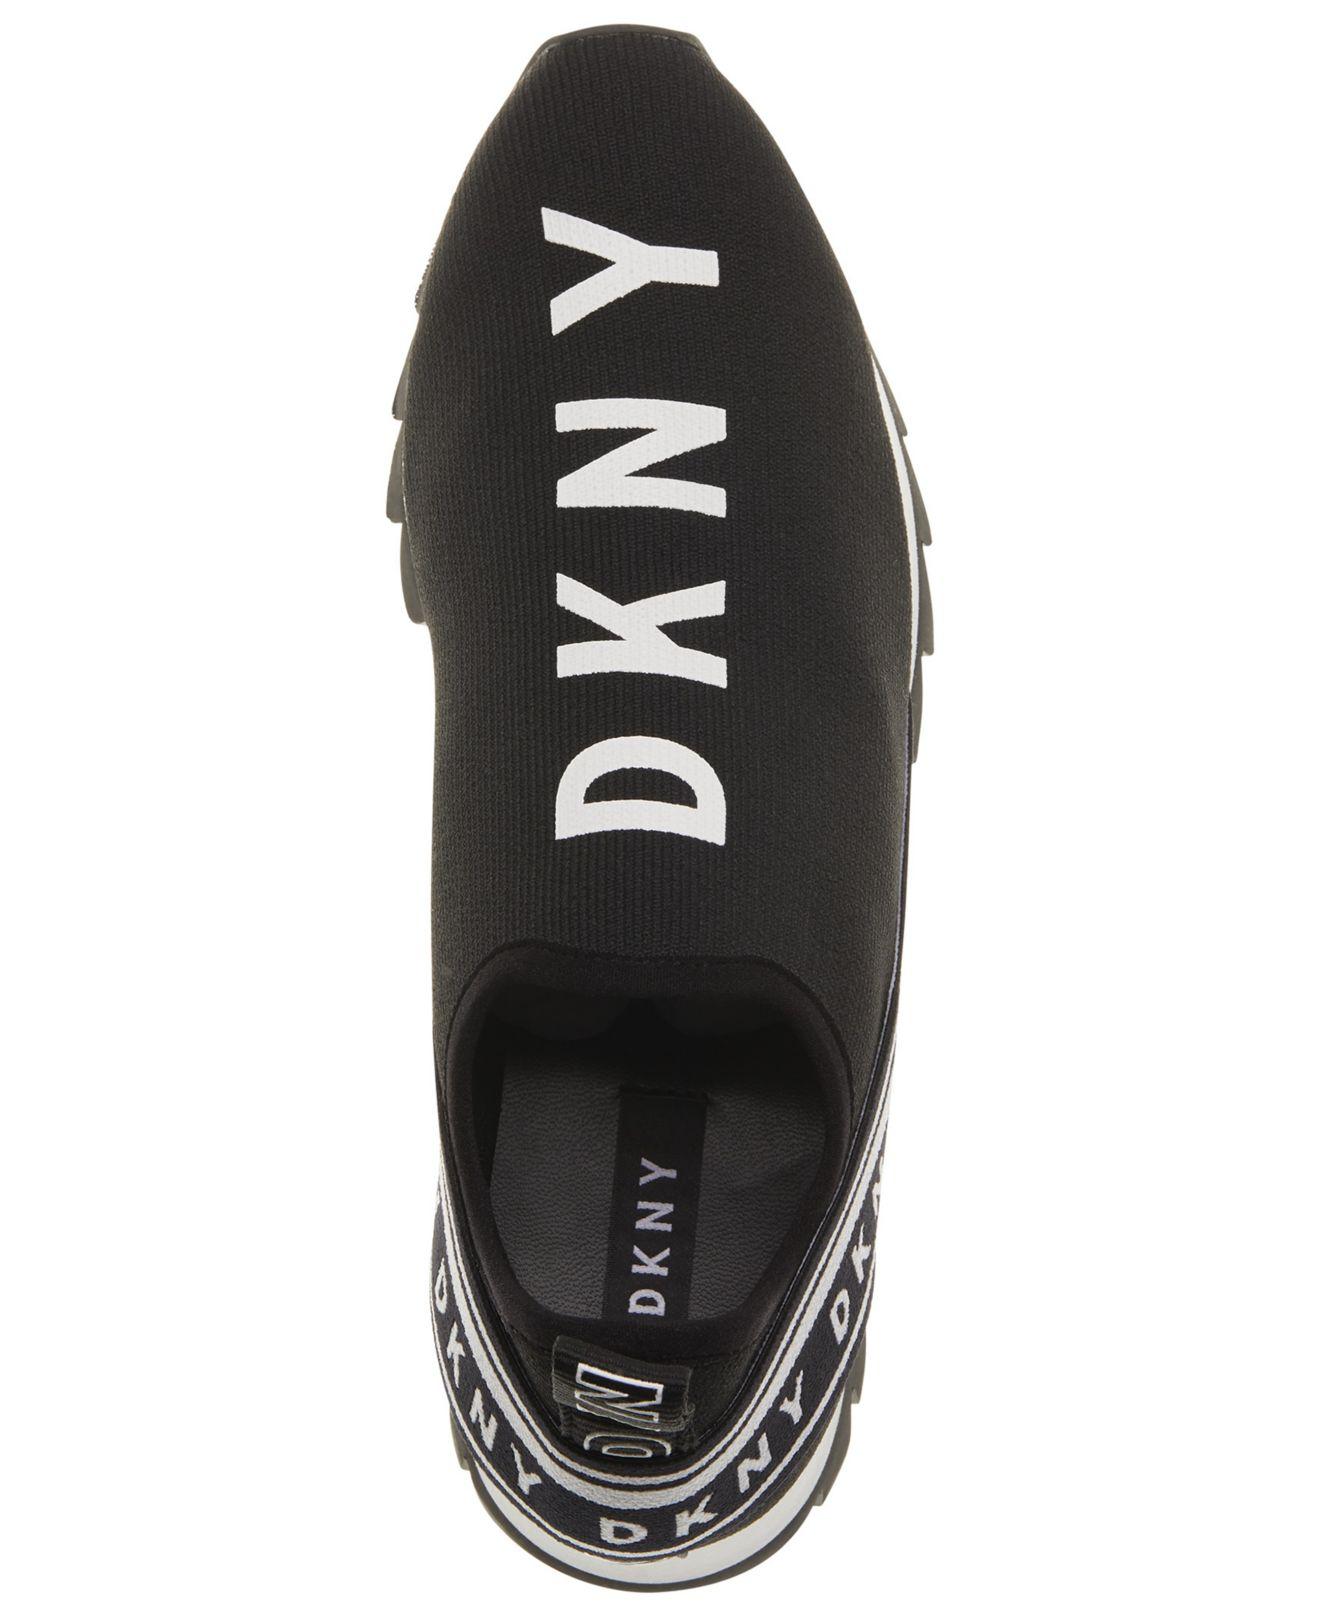 DKNY Neoprene Abbi Sneakers, Created 